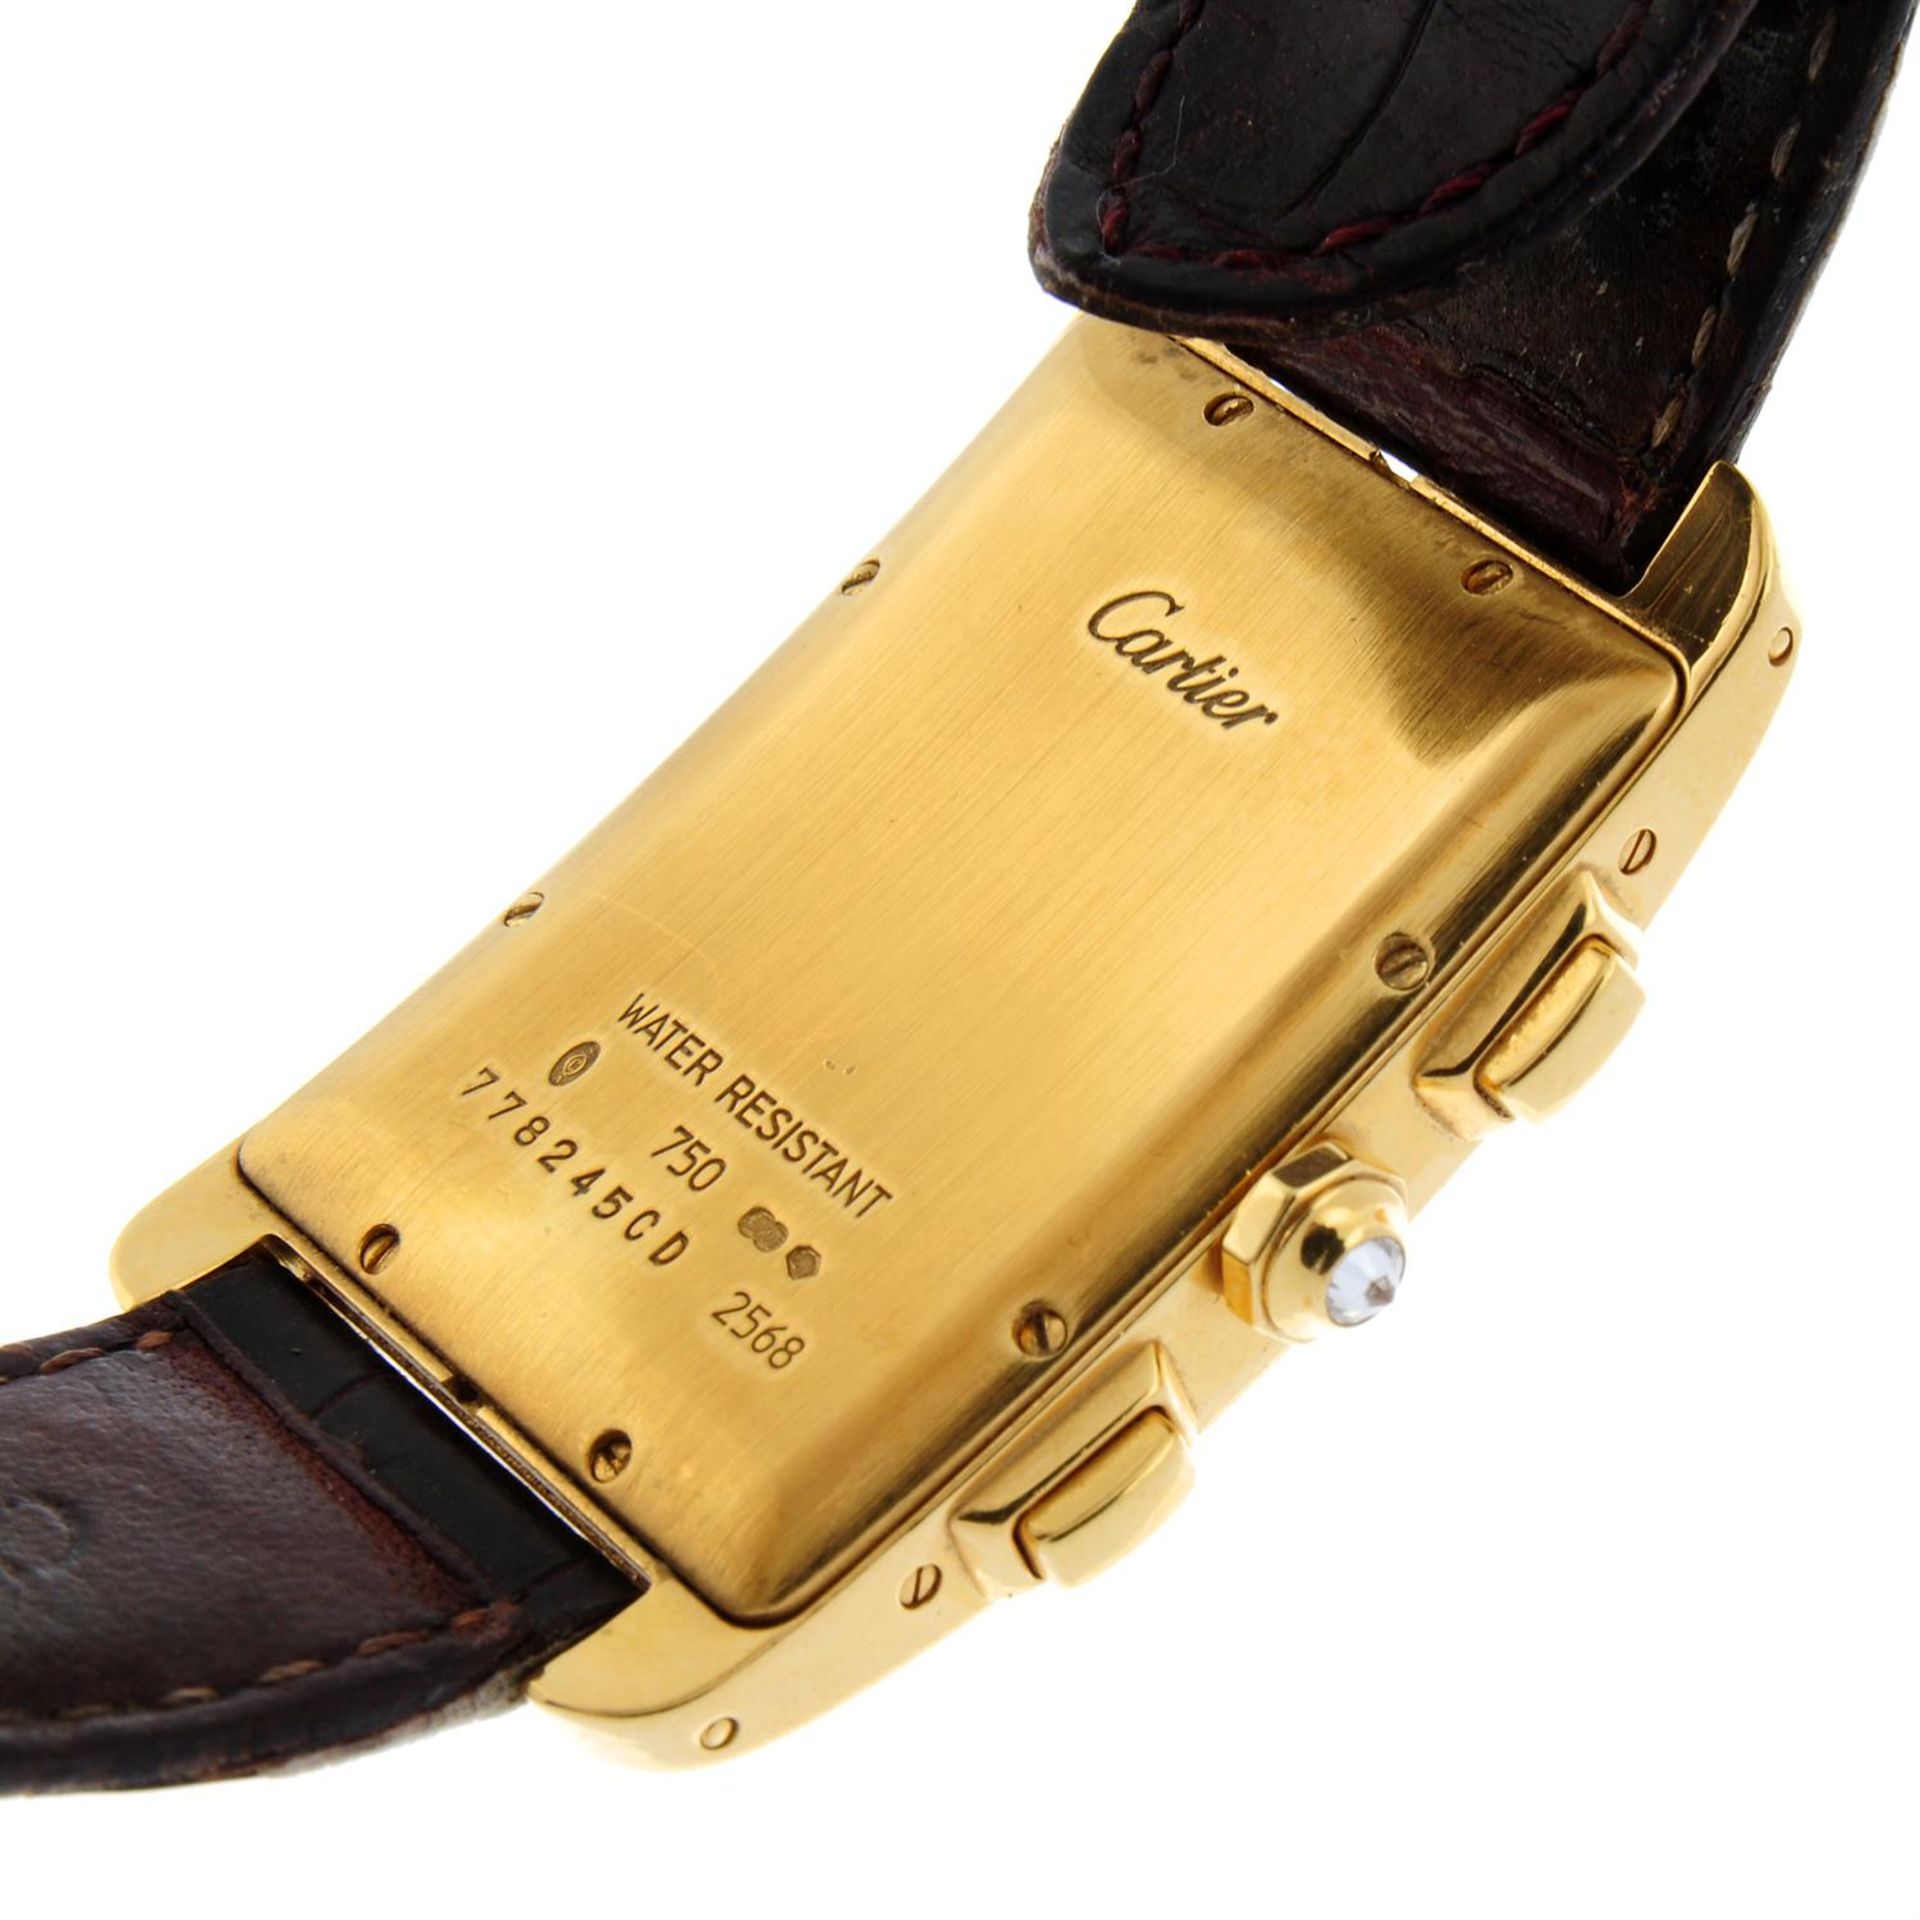 CARTIER - a factory diamond set 18ct gold Tank Américaine chronograph wrist watch, 27x37mm. - Image 4 of 5